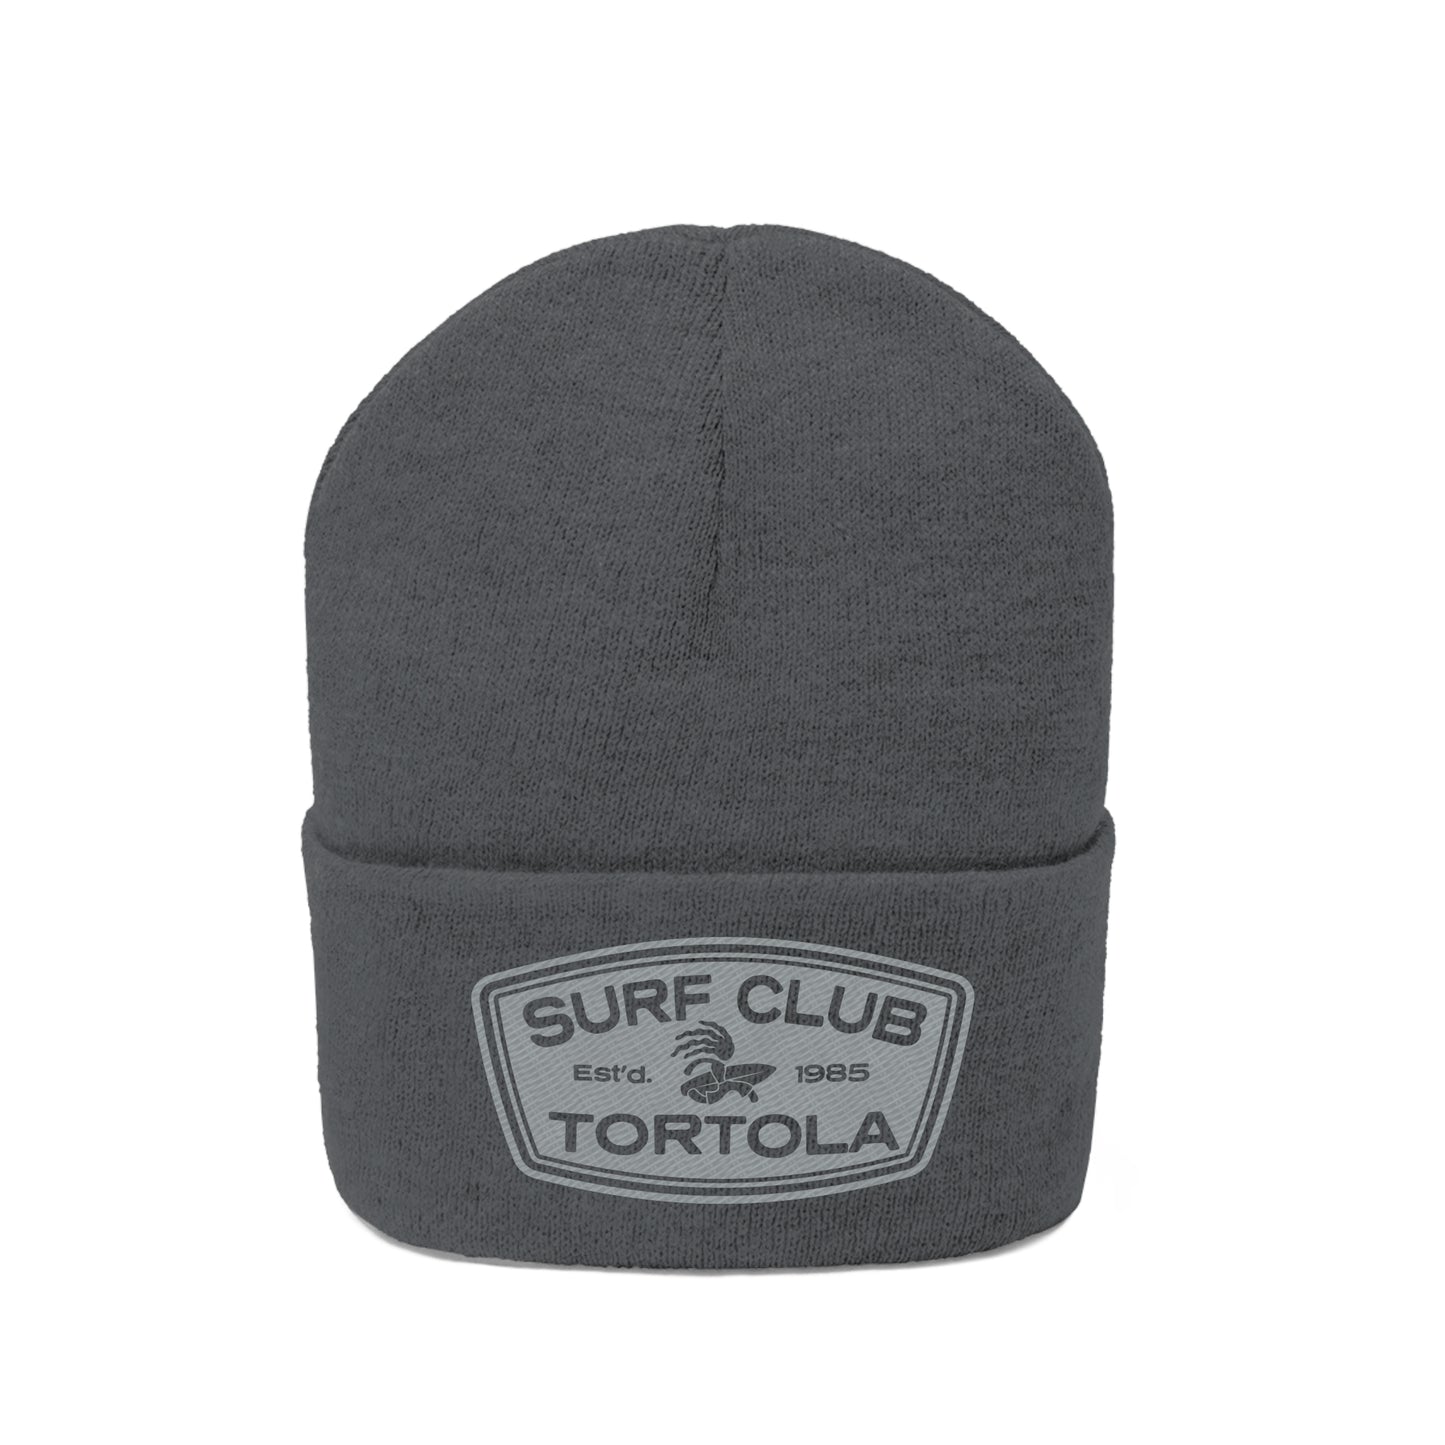 "Surf Club Tortola" Knit Beanie